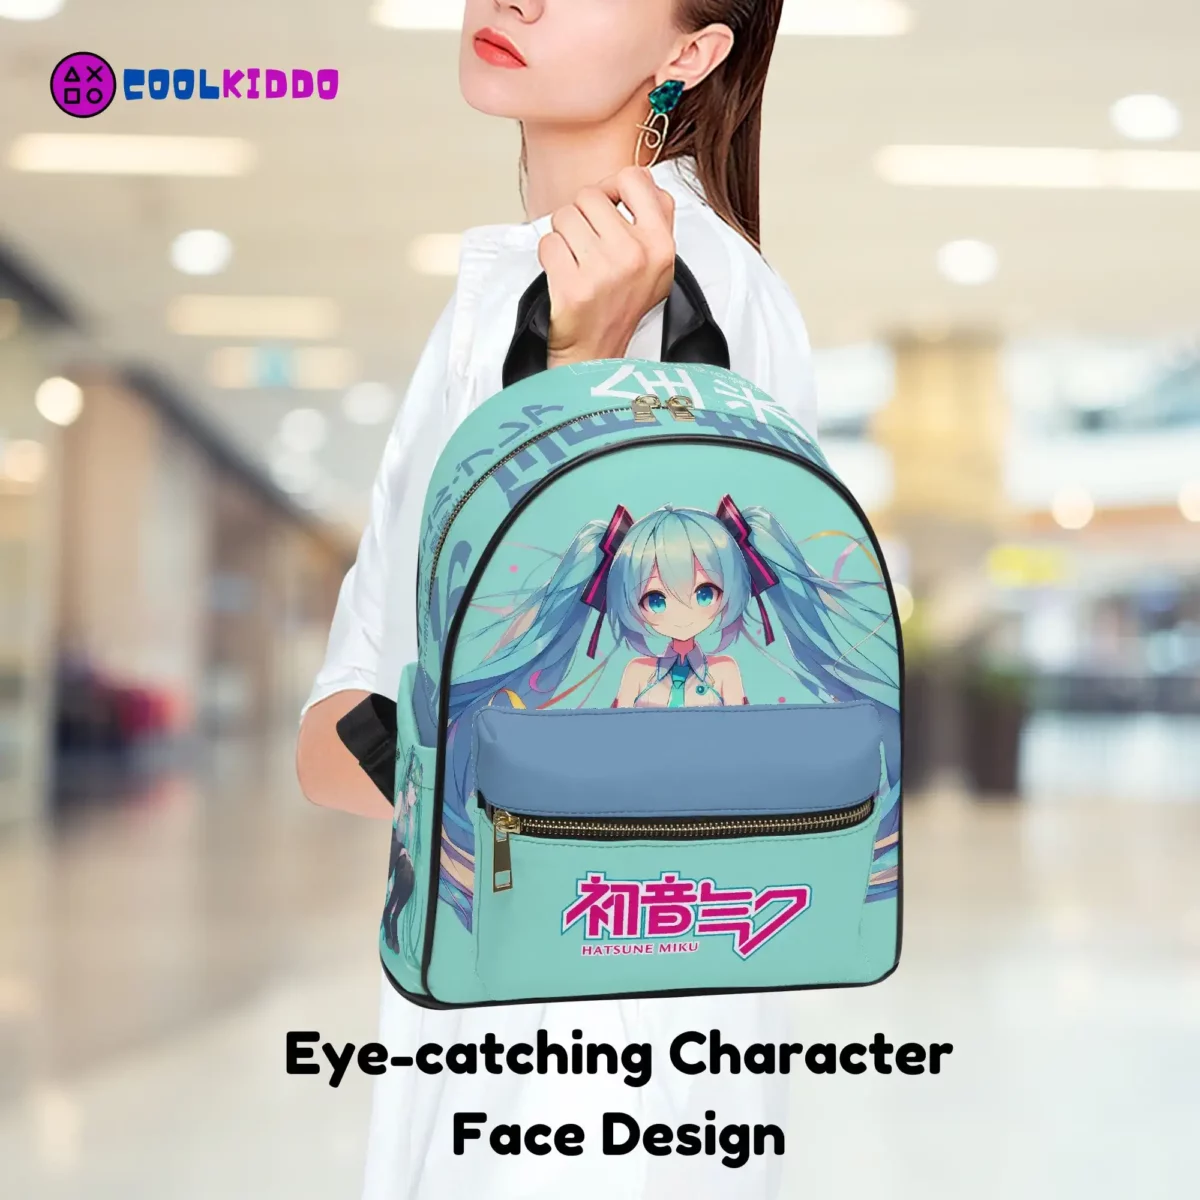 Hatsune Miku Anime Style Mini Leather Backpack For Girls/Youth | School Book Bag Cool Kiddo 22